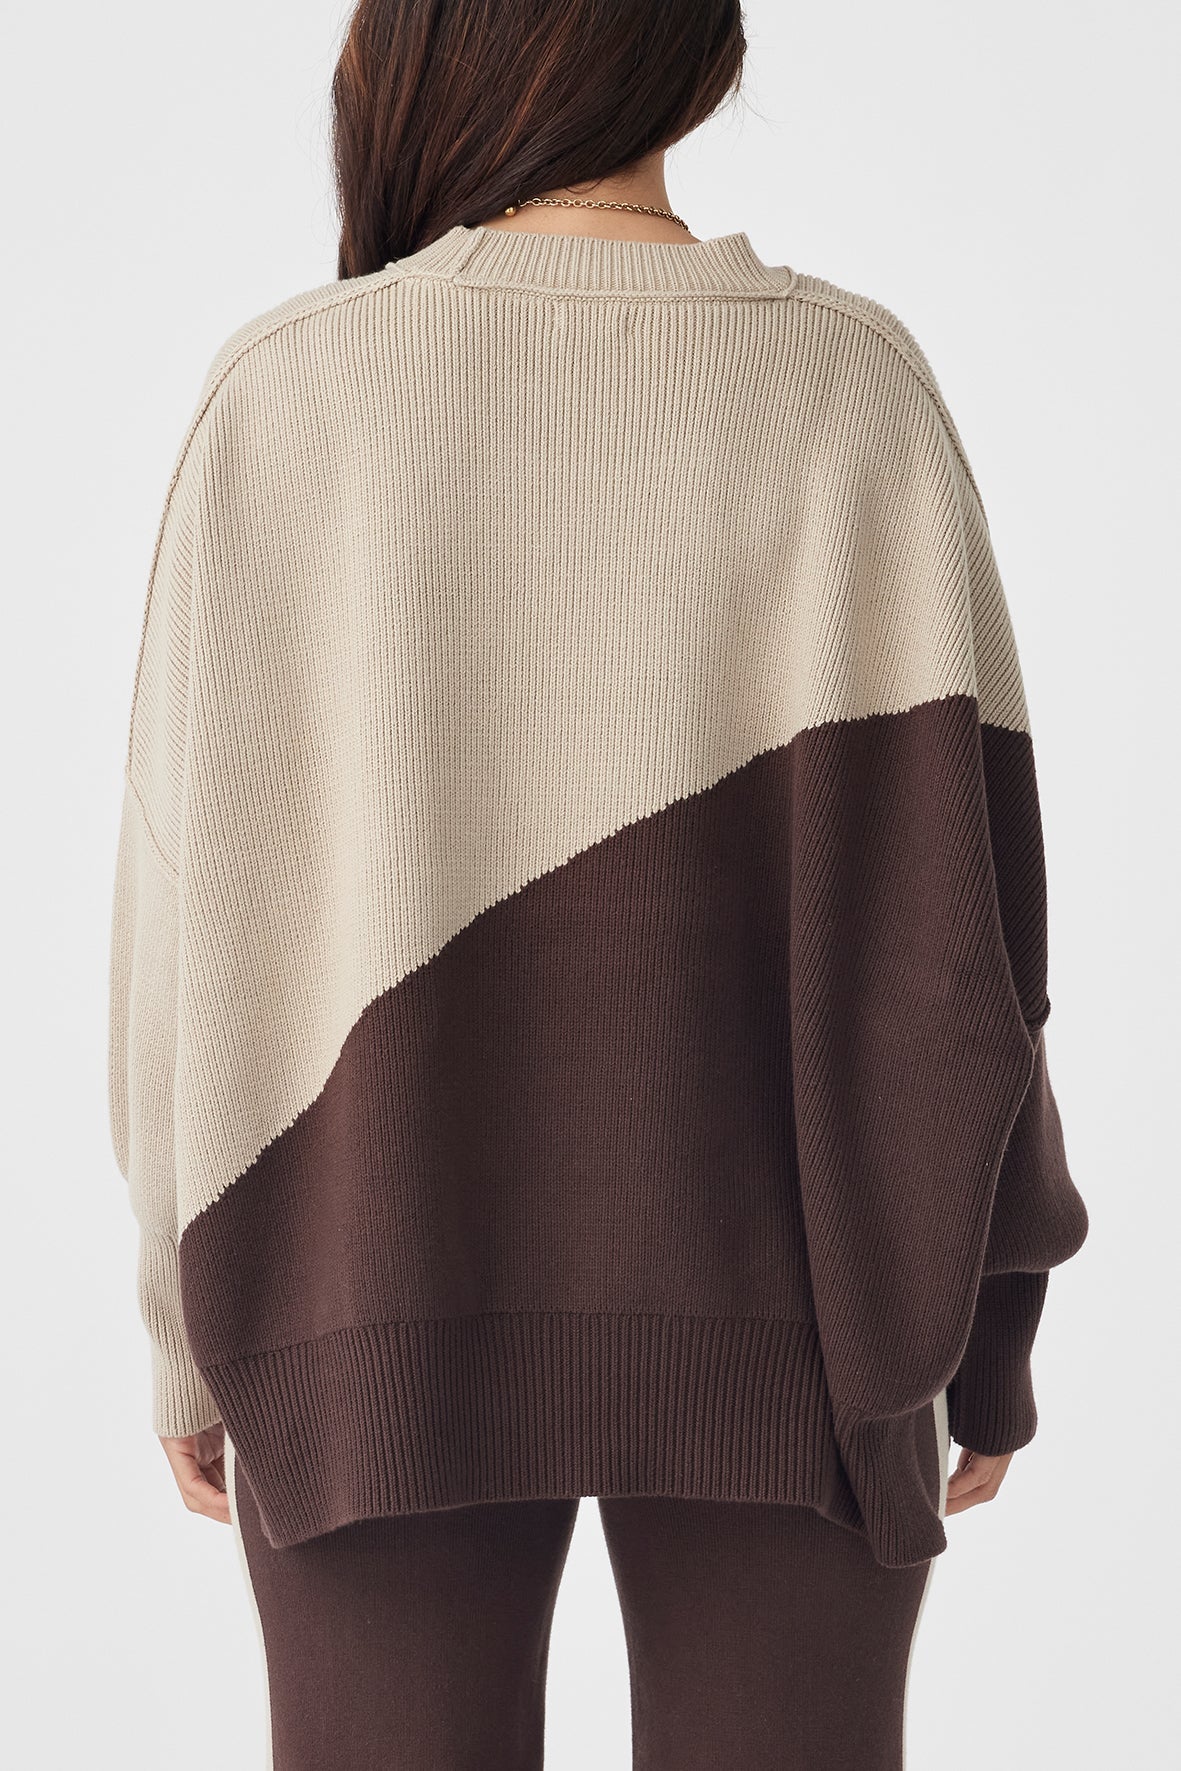 Neo Sweater- Chocolate & Taupe